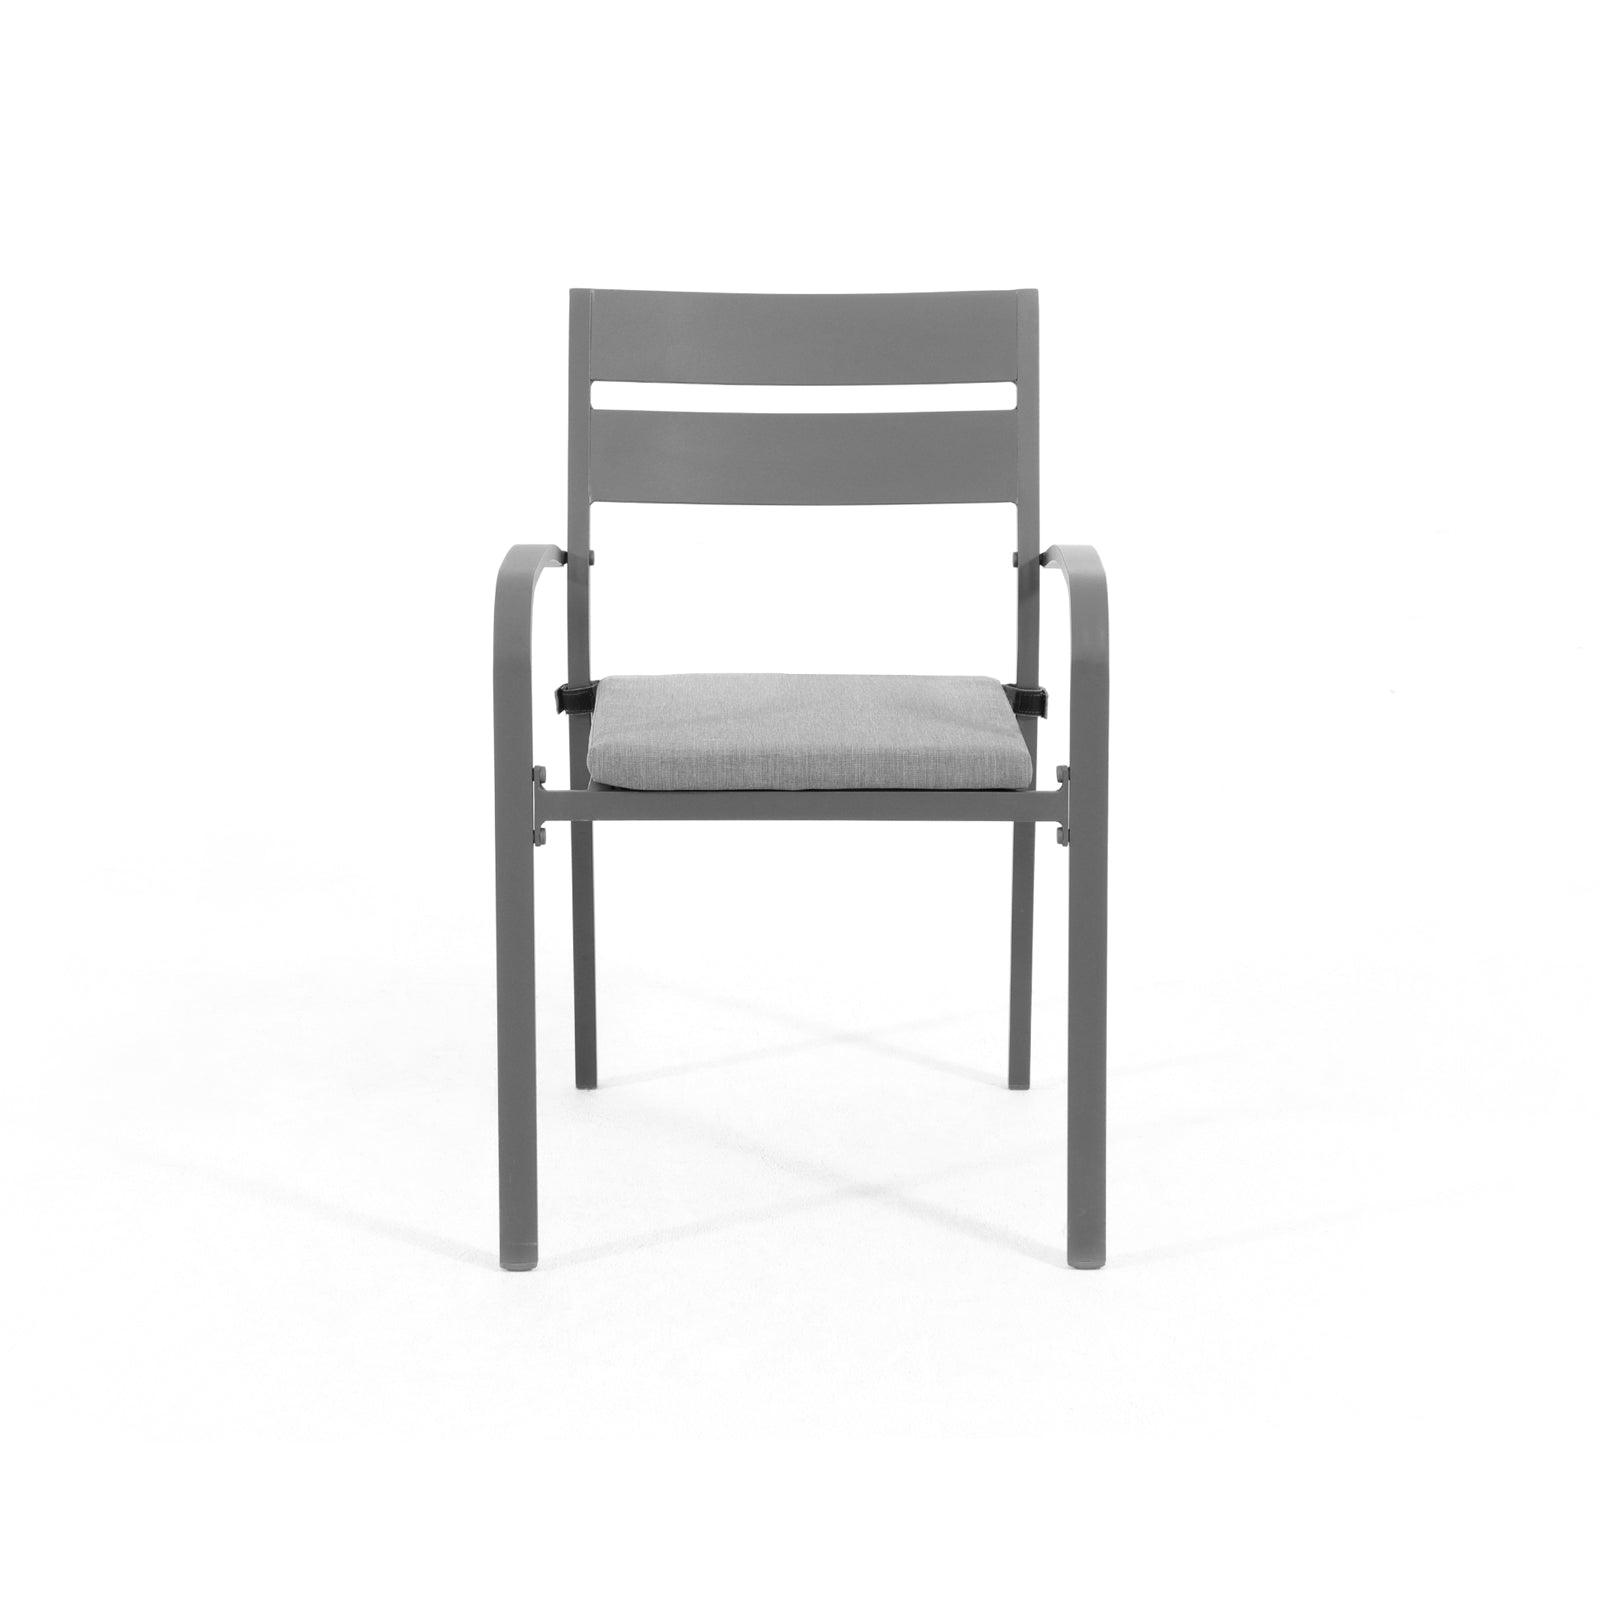 Salina Aluminum Outdoor Dining Chairs, Dark Grey Stackable Chairs With Cushions - Jardina Furniture#color_Dark Grey